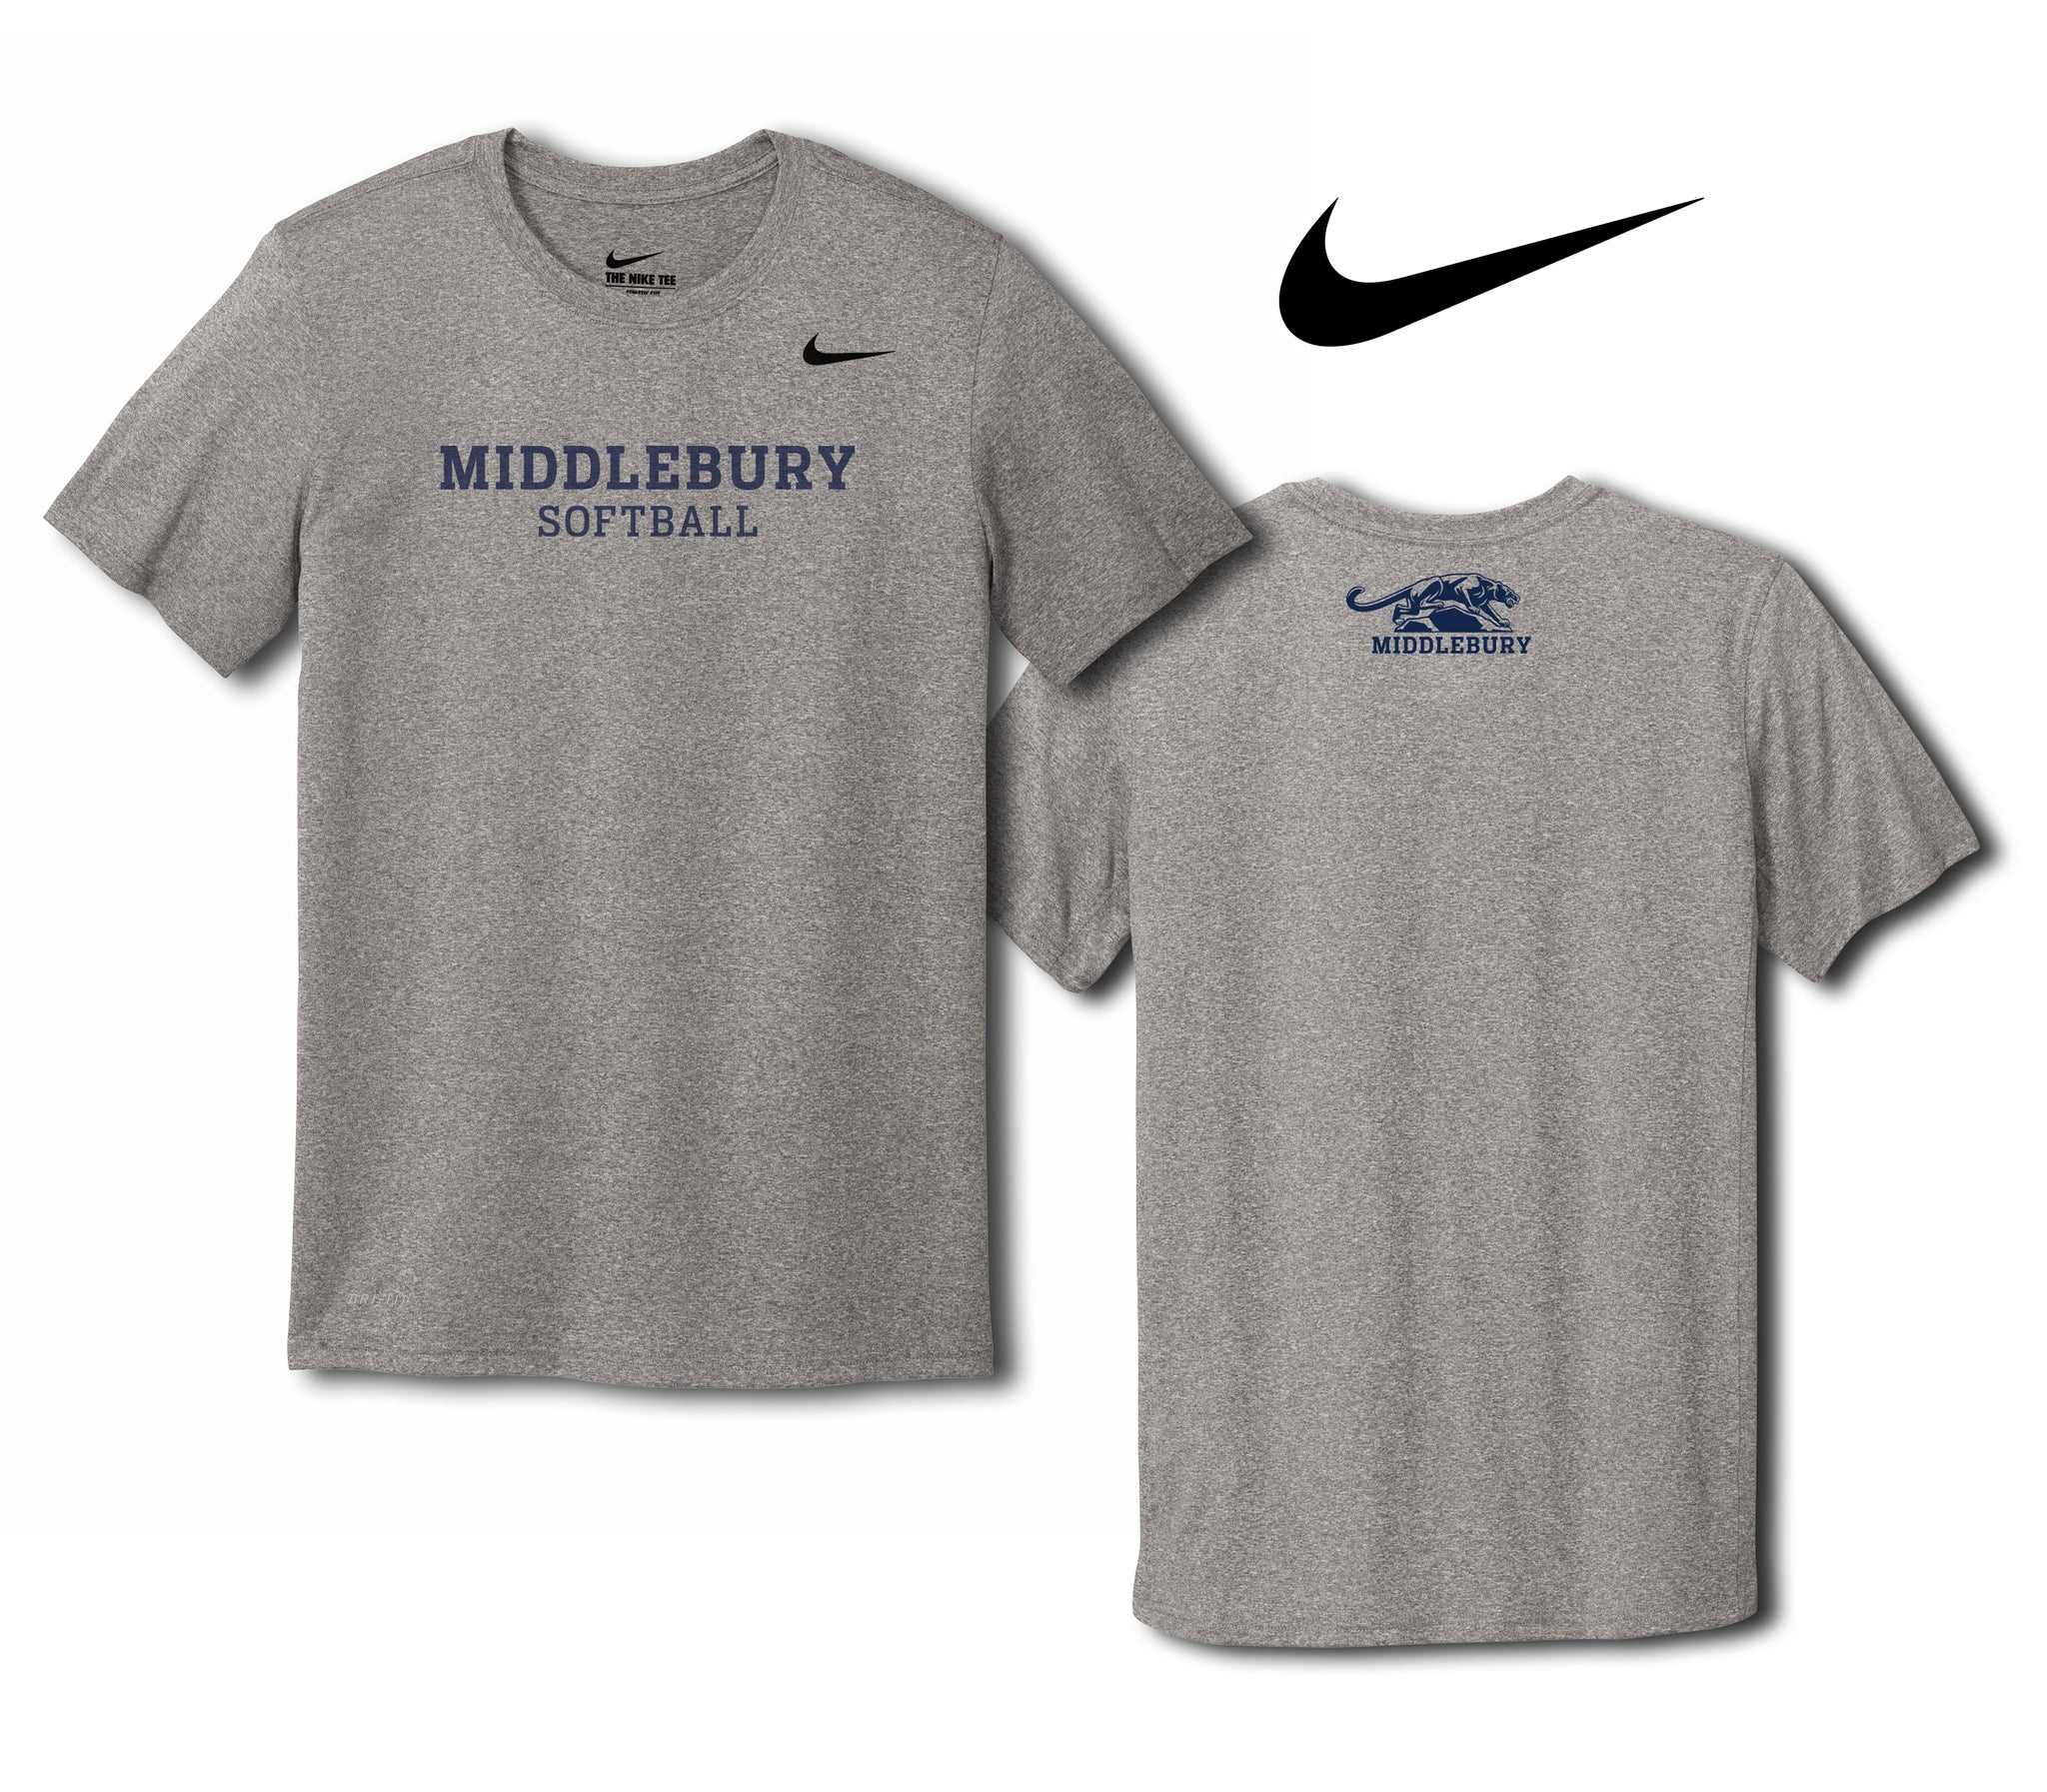 Nike Middlebury Softball T-Shirt (Grey)